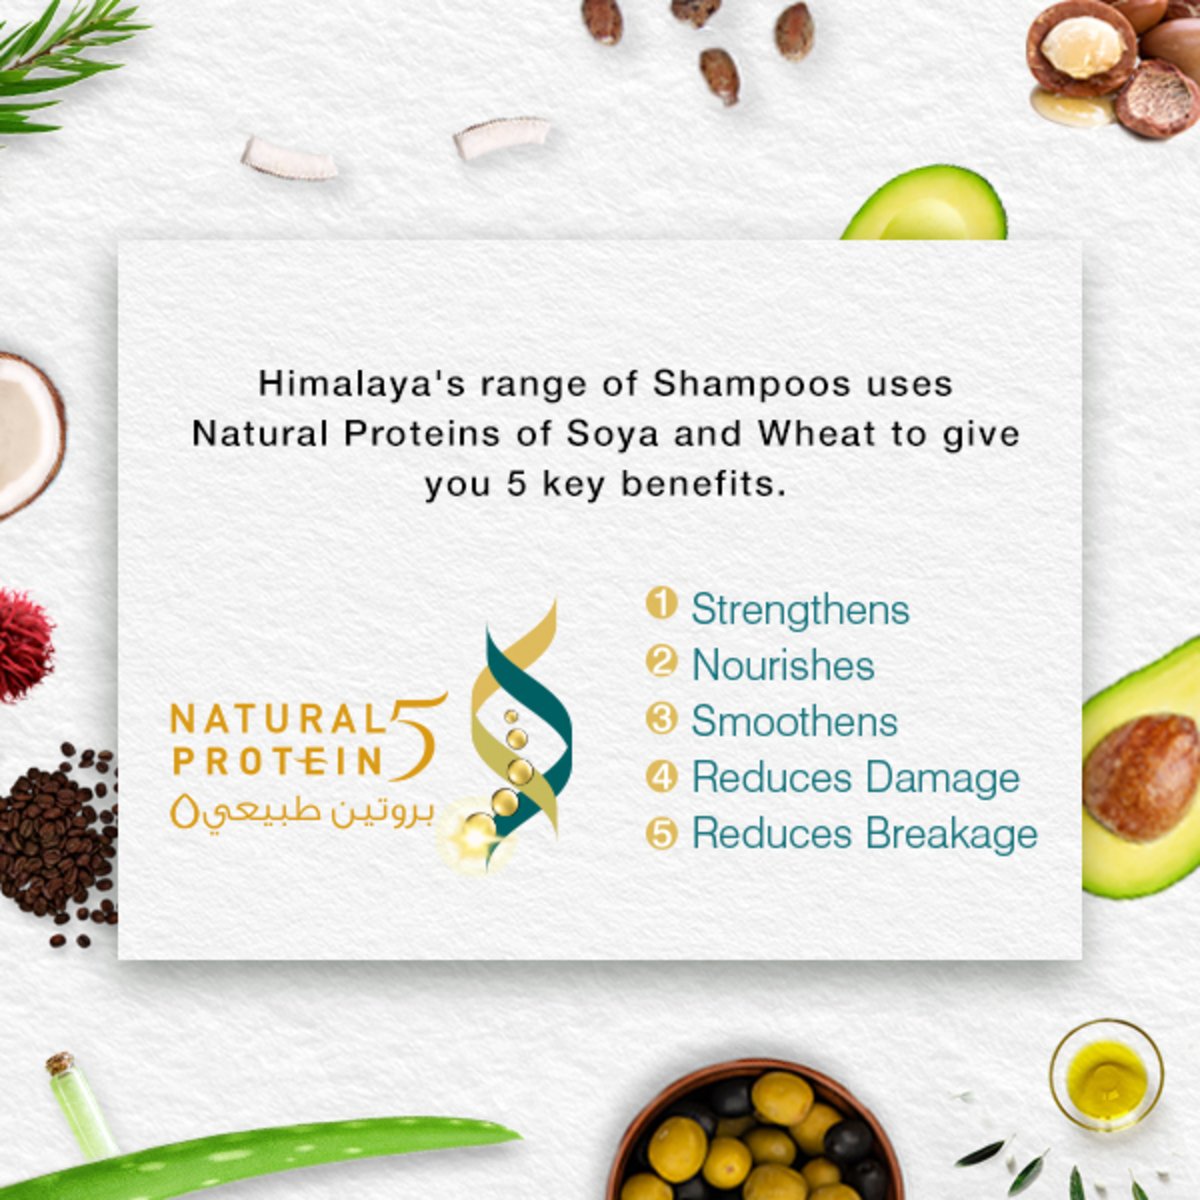 Himalaya Volume & Thickness Shampoo Value Pack 2 x 400 ml